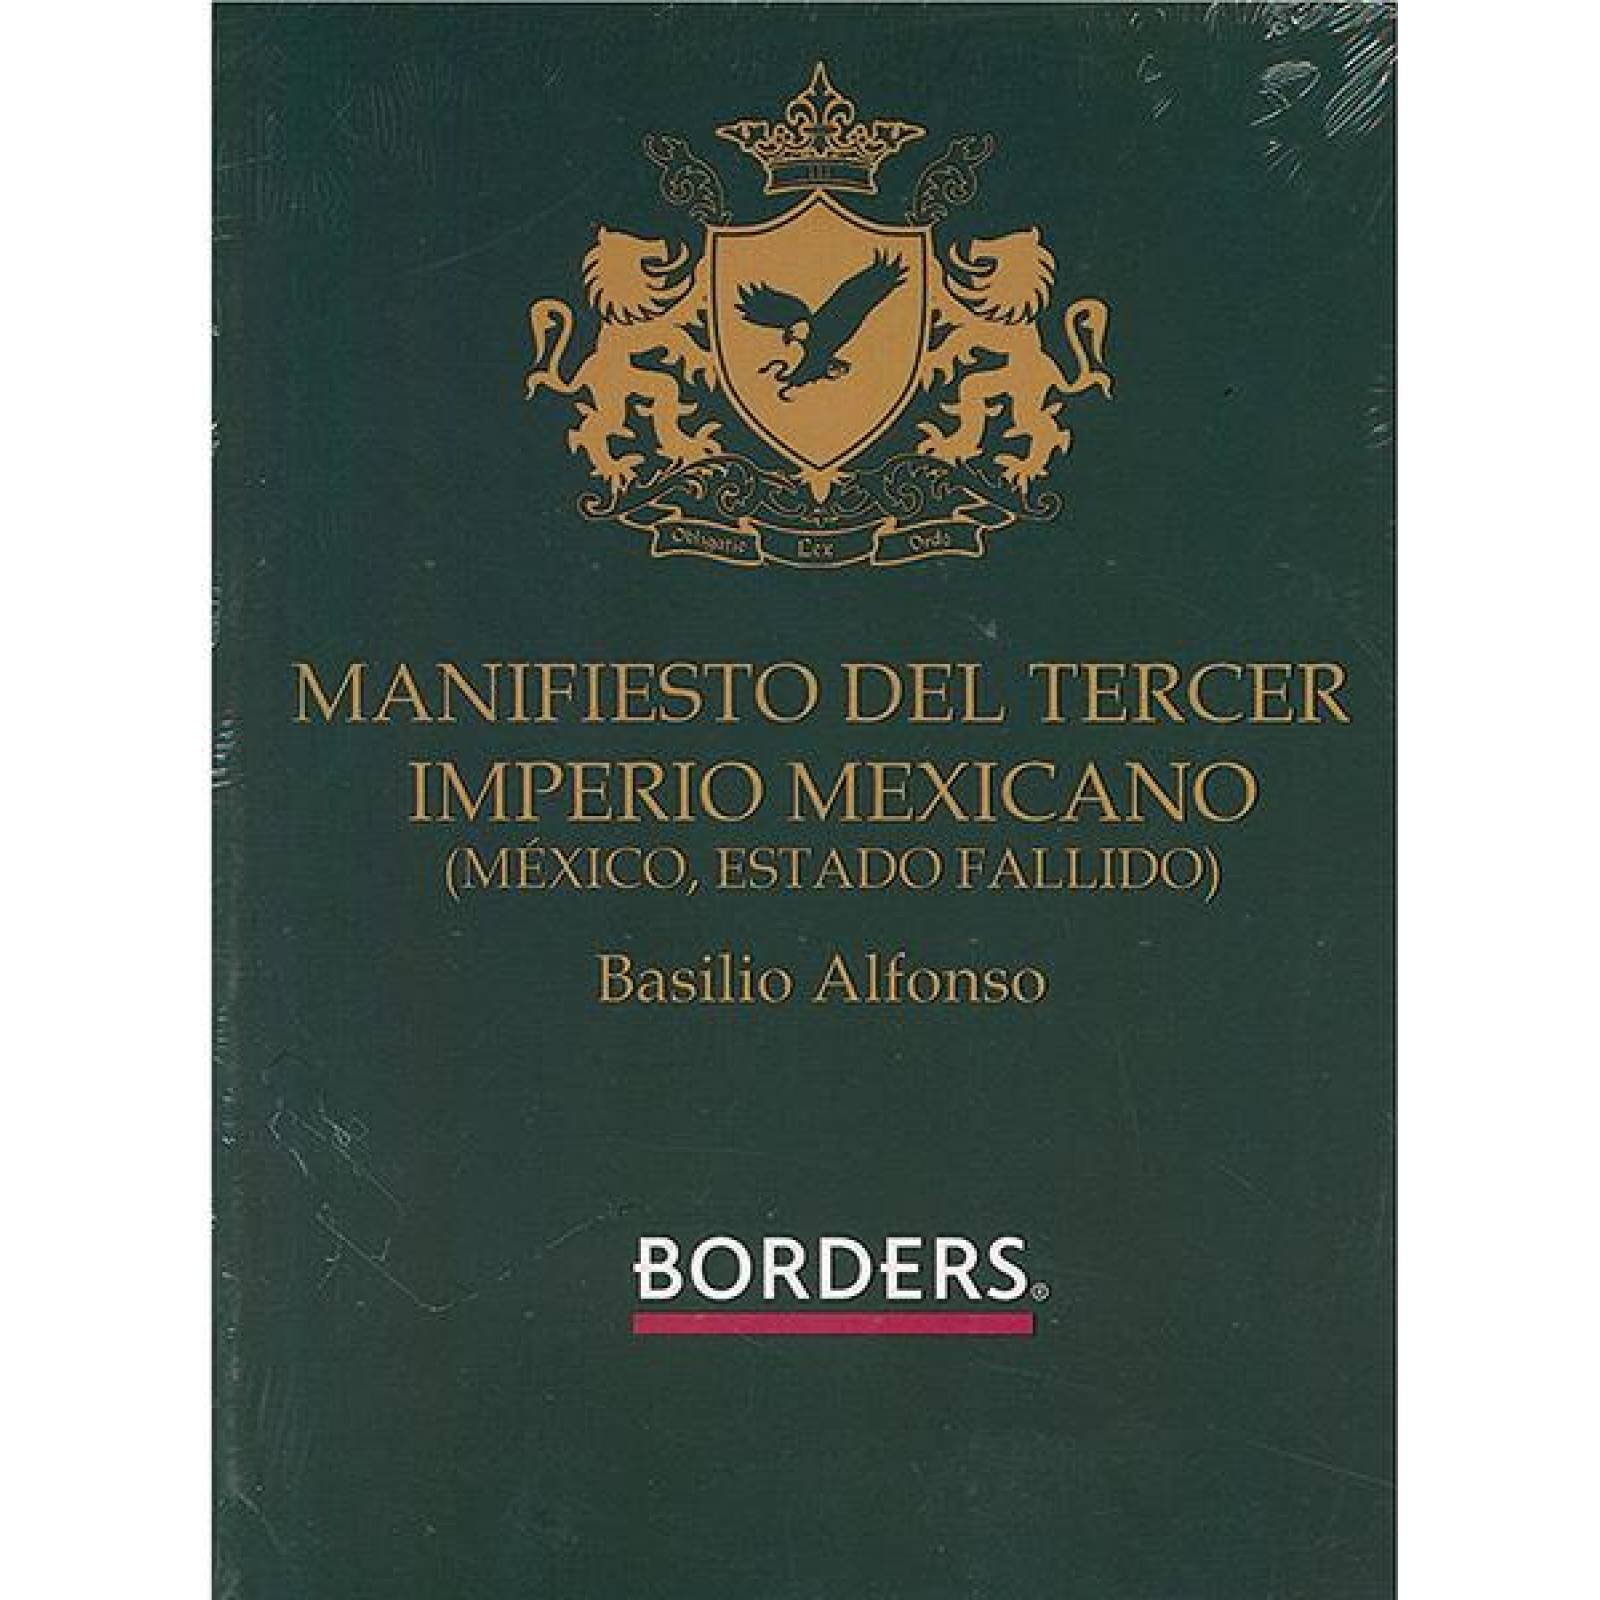 Manifiesto del tercer impero mexicano 